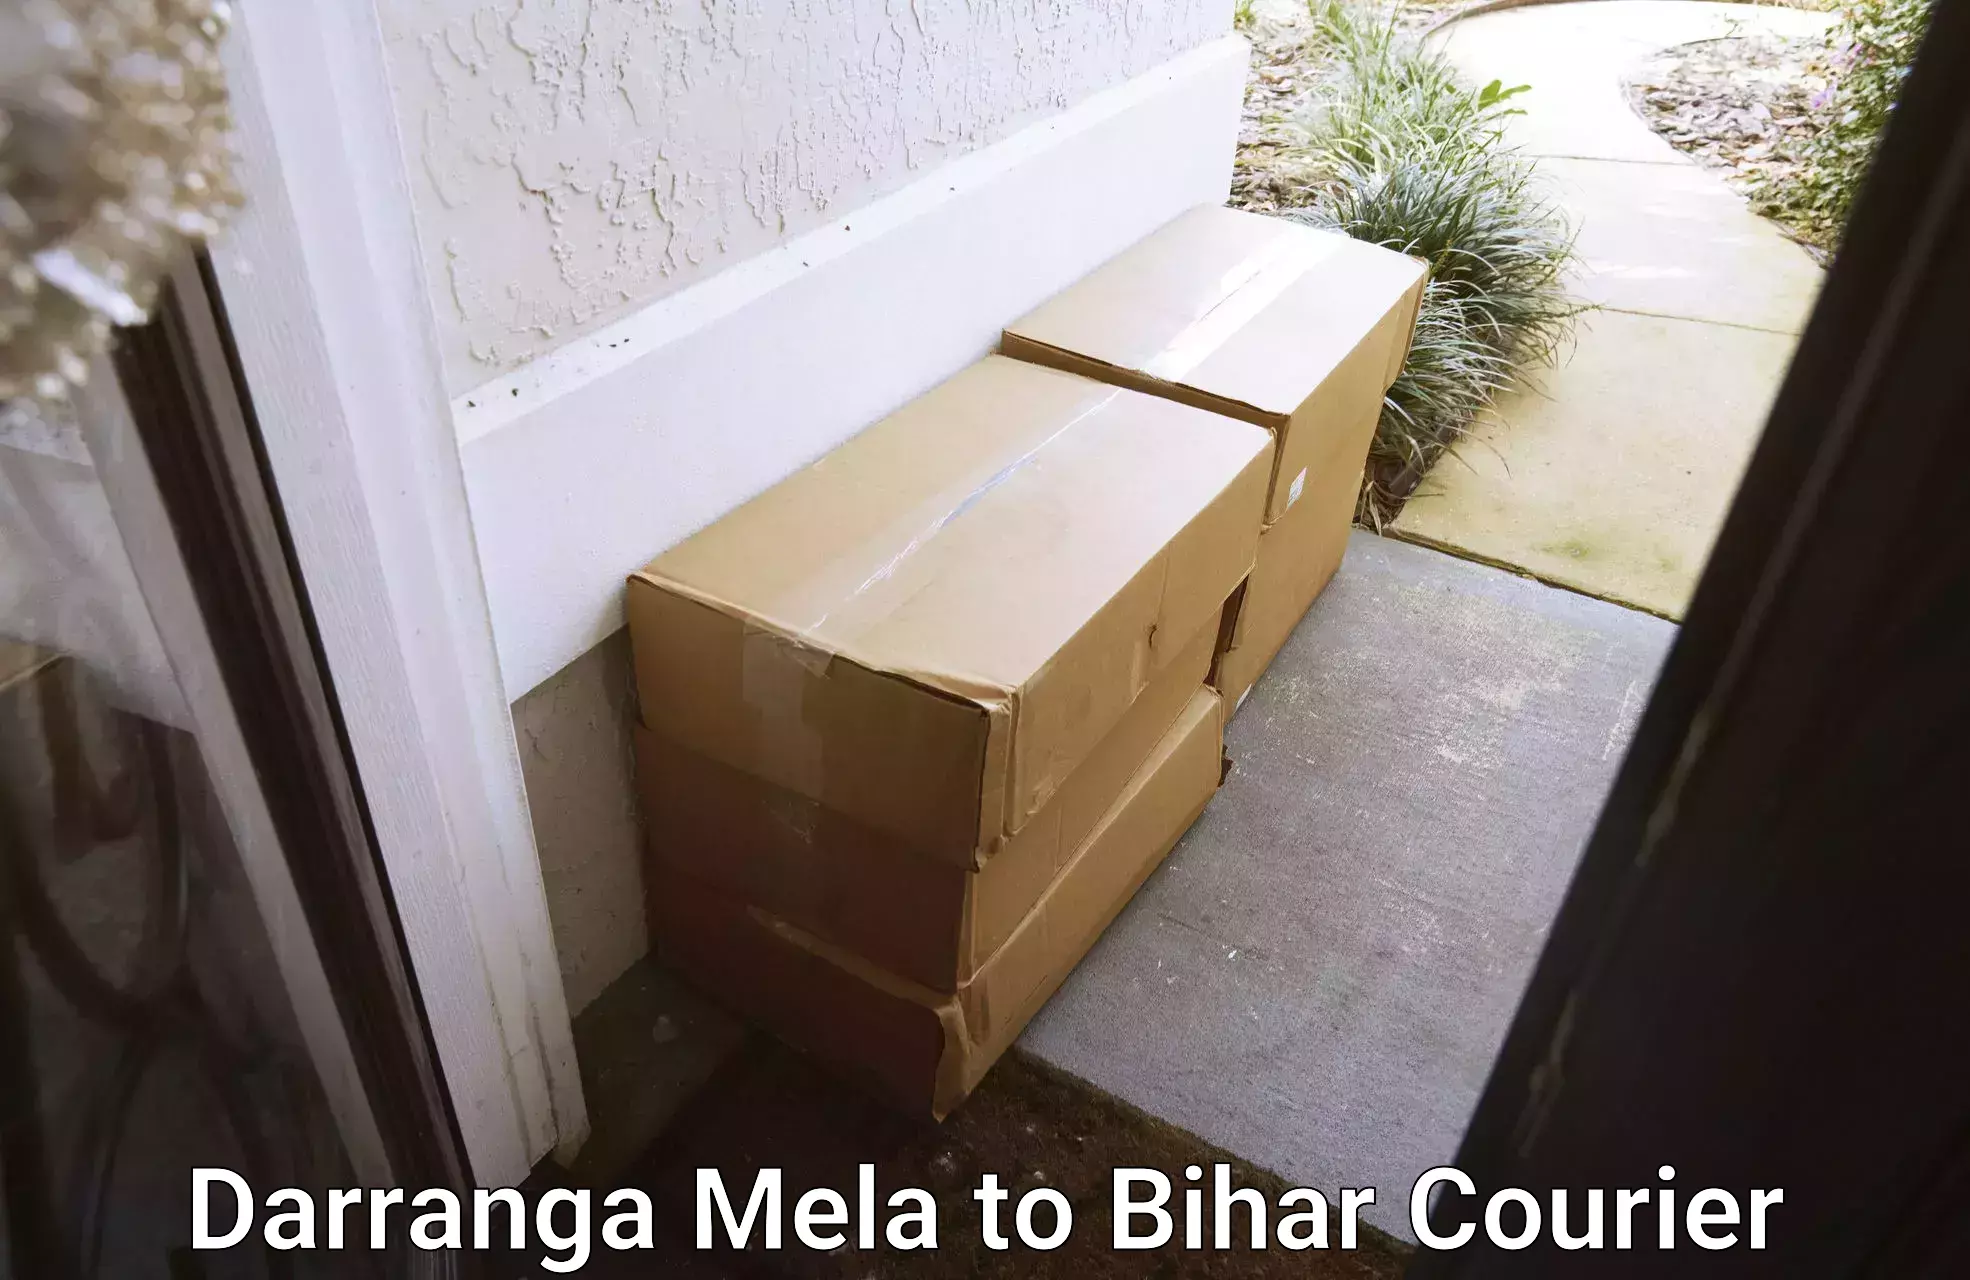 Emergency parcel delivery in Darranga Mela to Gaya